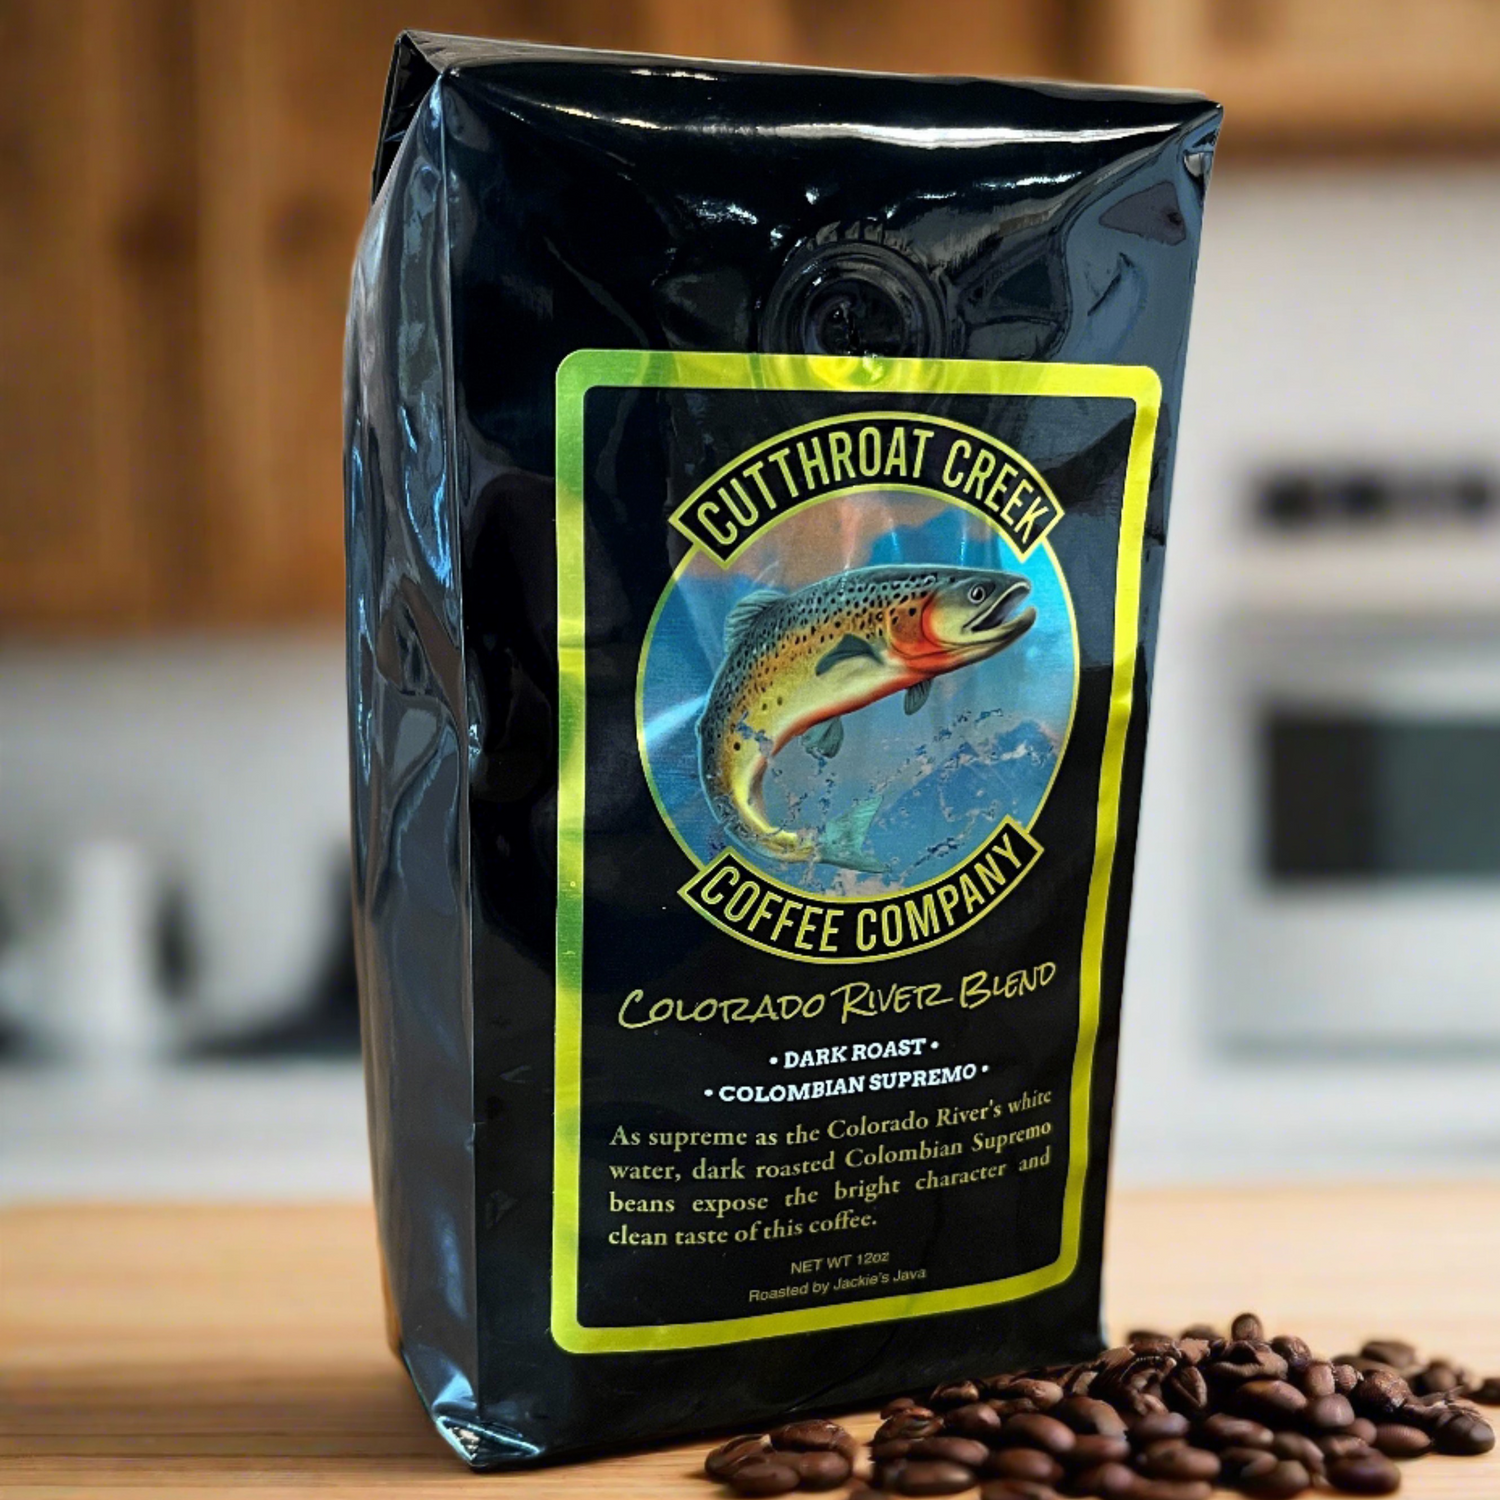 Cutthroat Creek Coffee Company